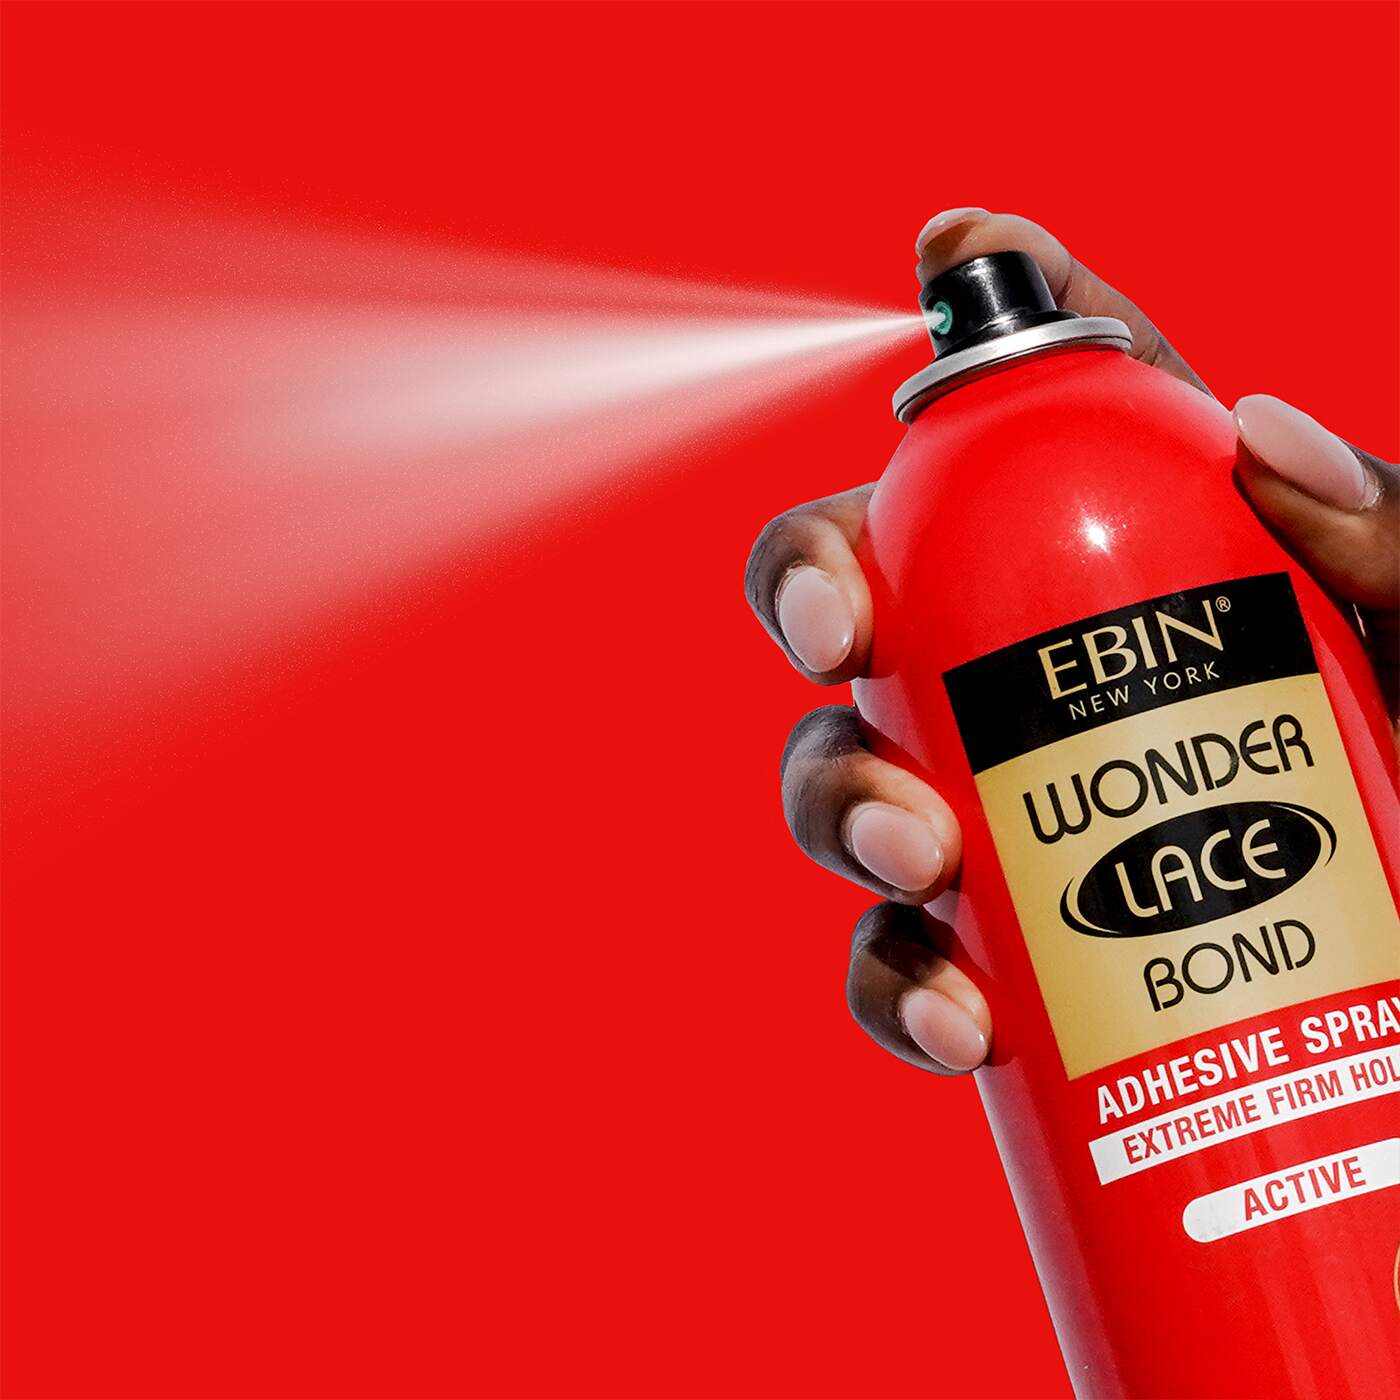 Ebin Wonder Lace Bond Adhesive Spray Extreme Firm Hold 2.7oz